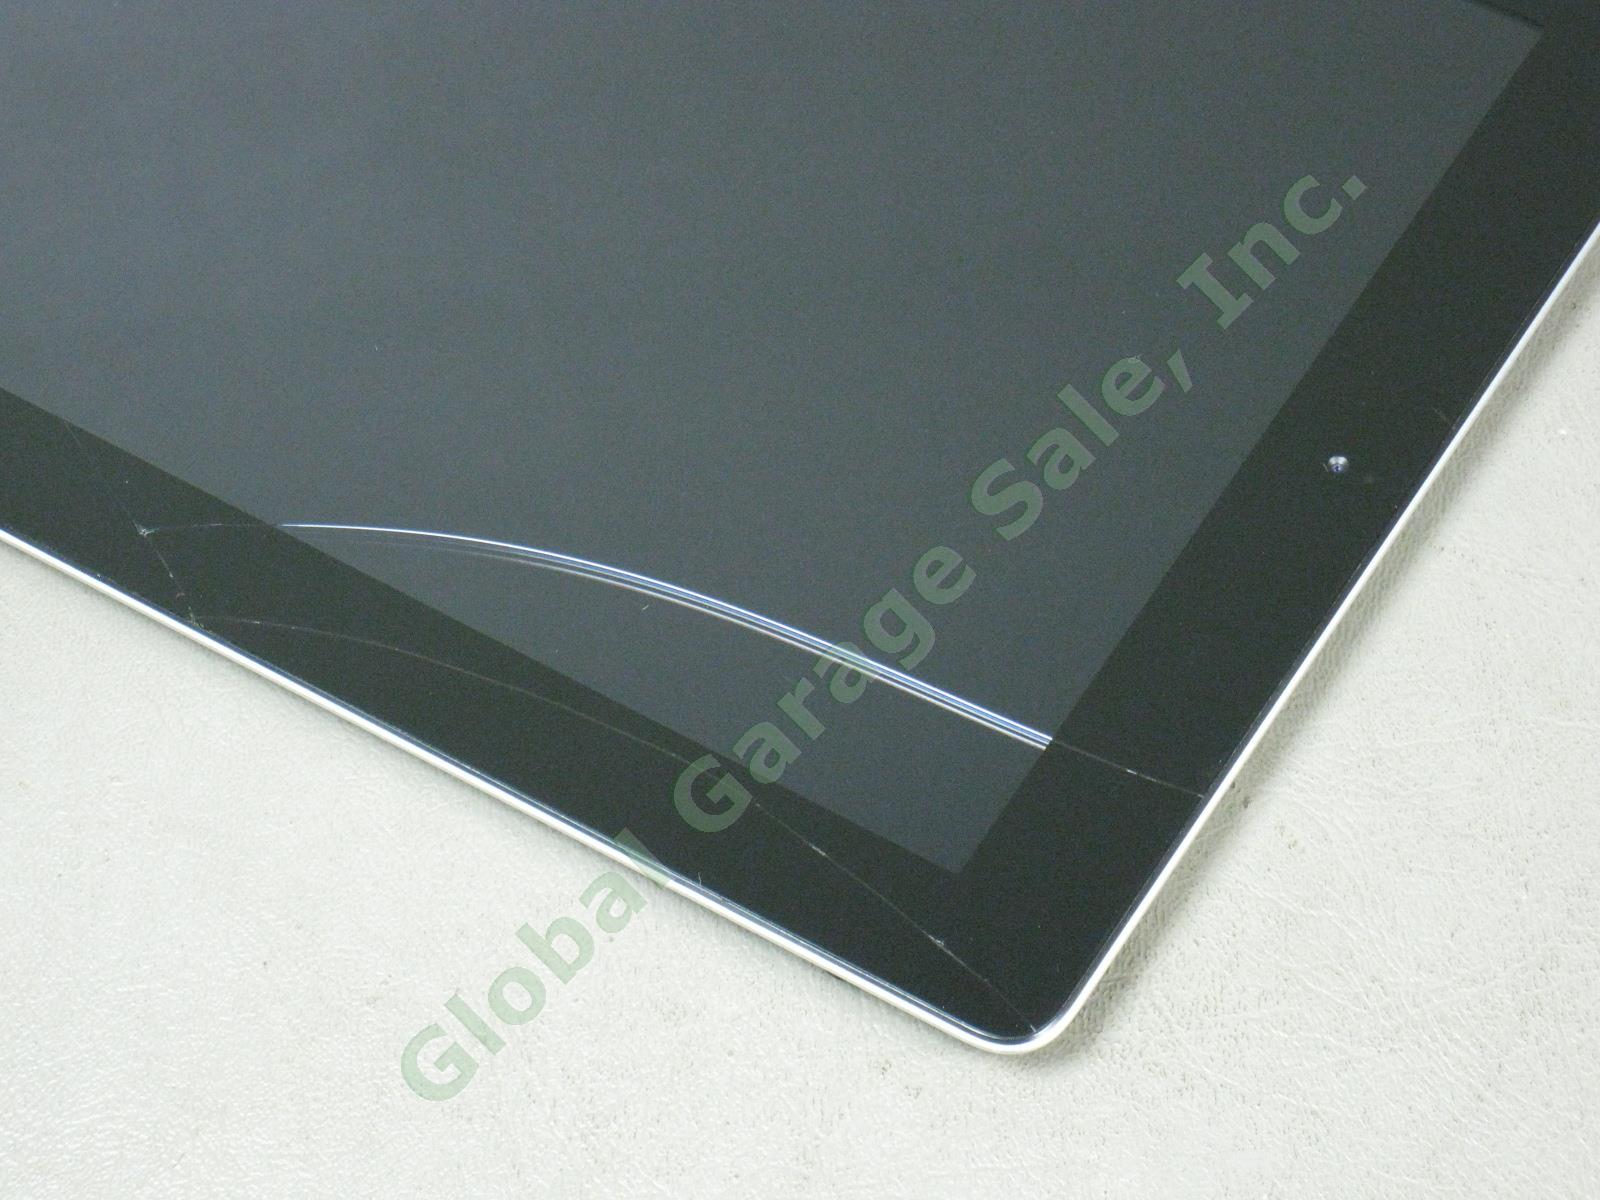 Apple iPad 2 Wifi 32GB Black Tablet MC770LL/A A1395 Works Great Cracked Glass NR 4